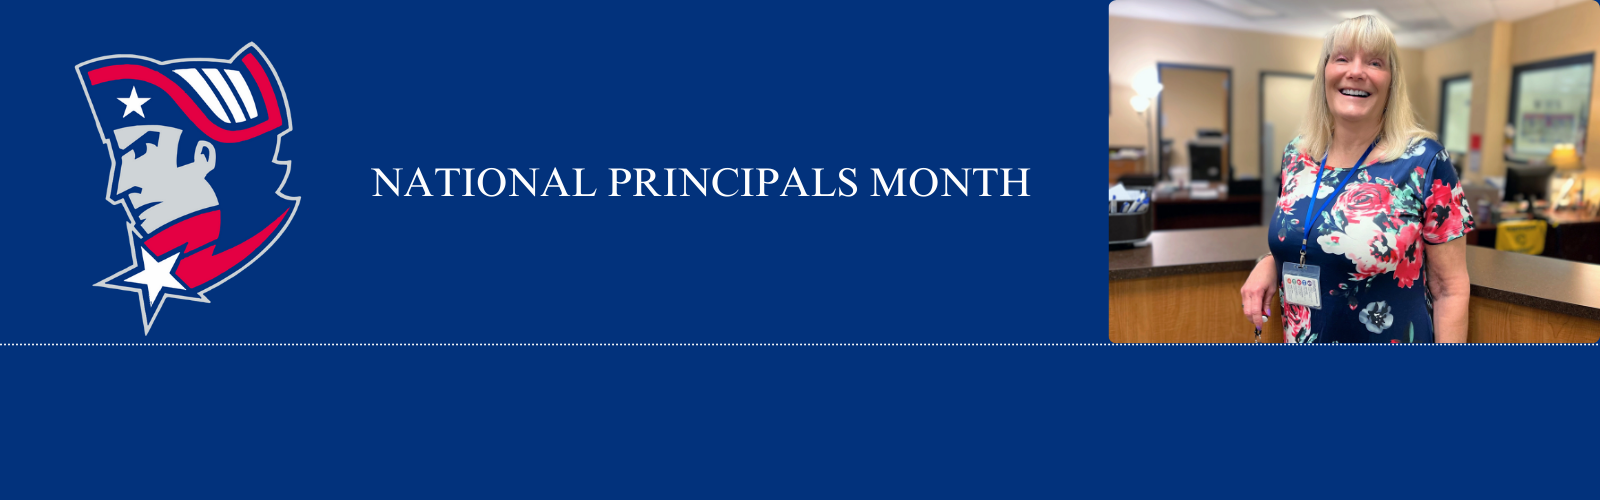 Celebrating National Principals Month!